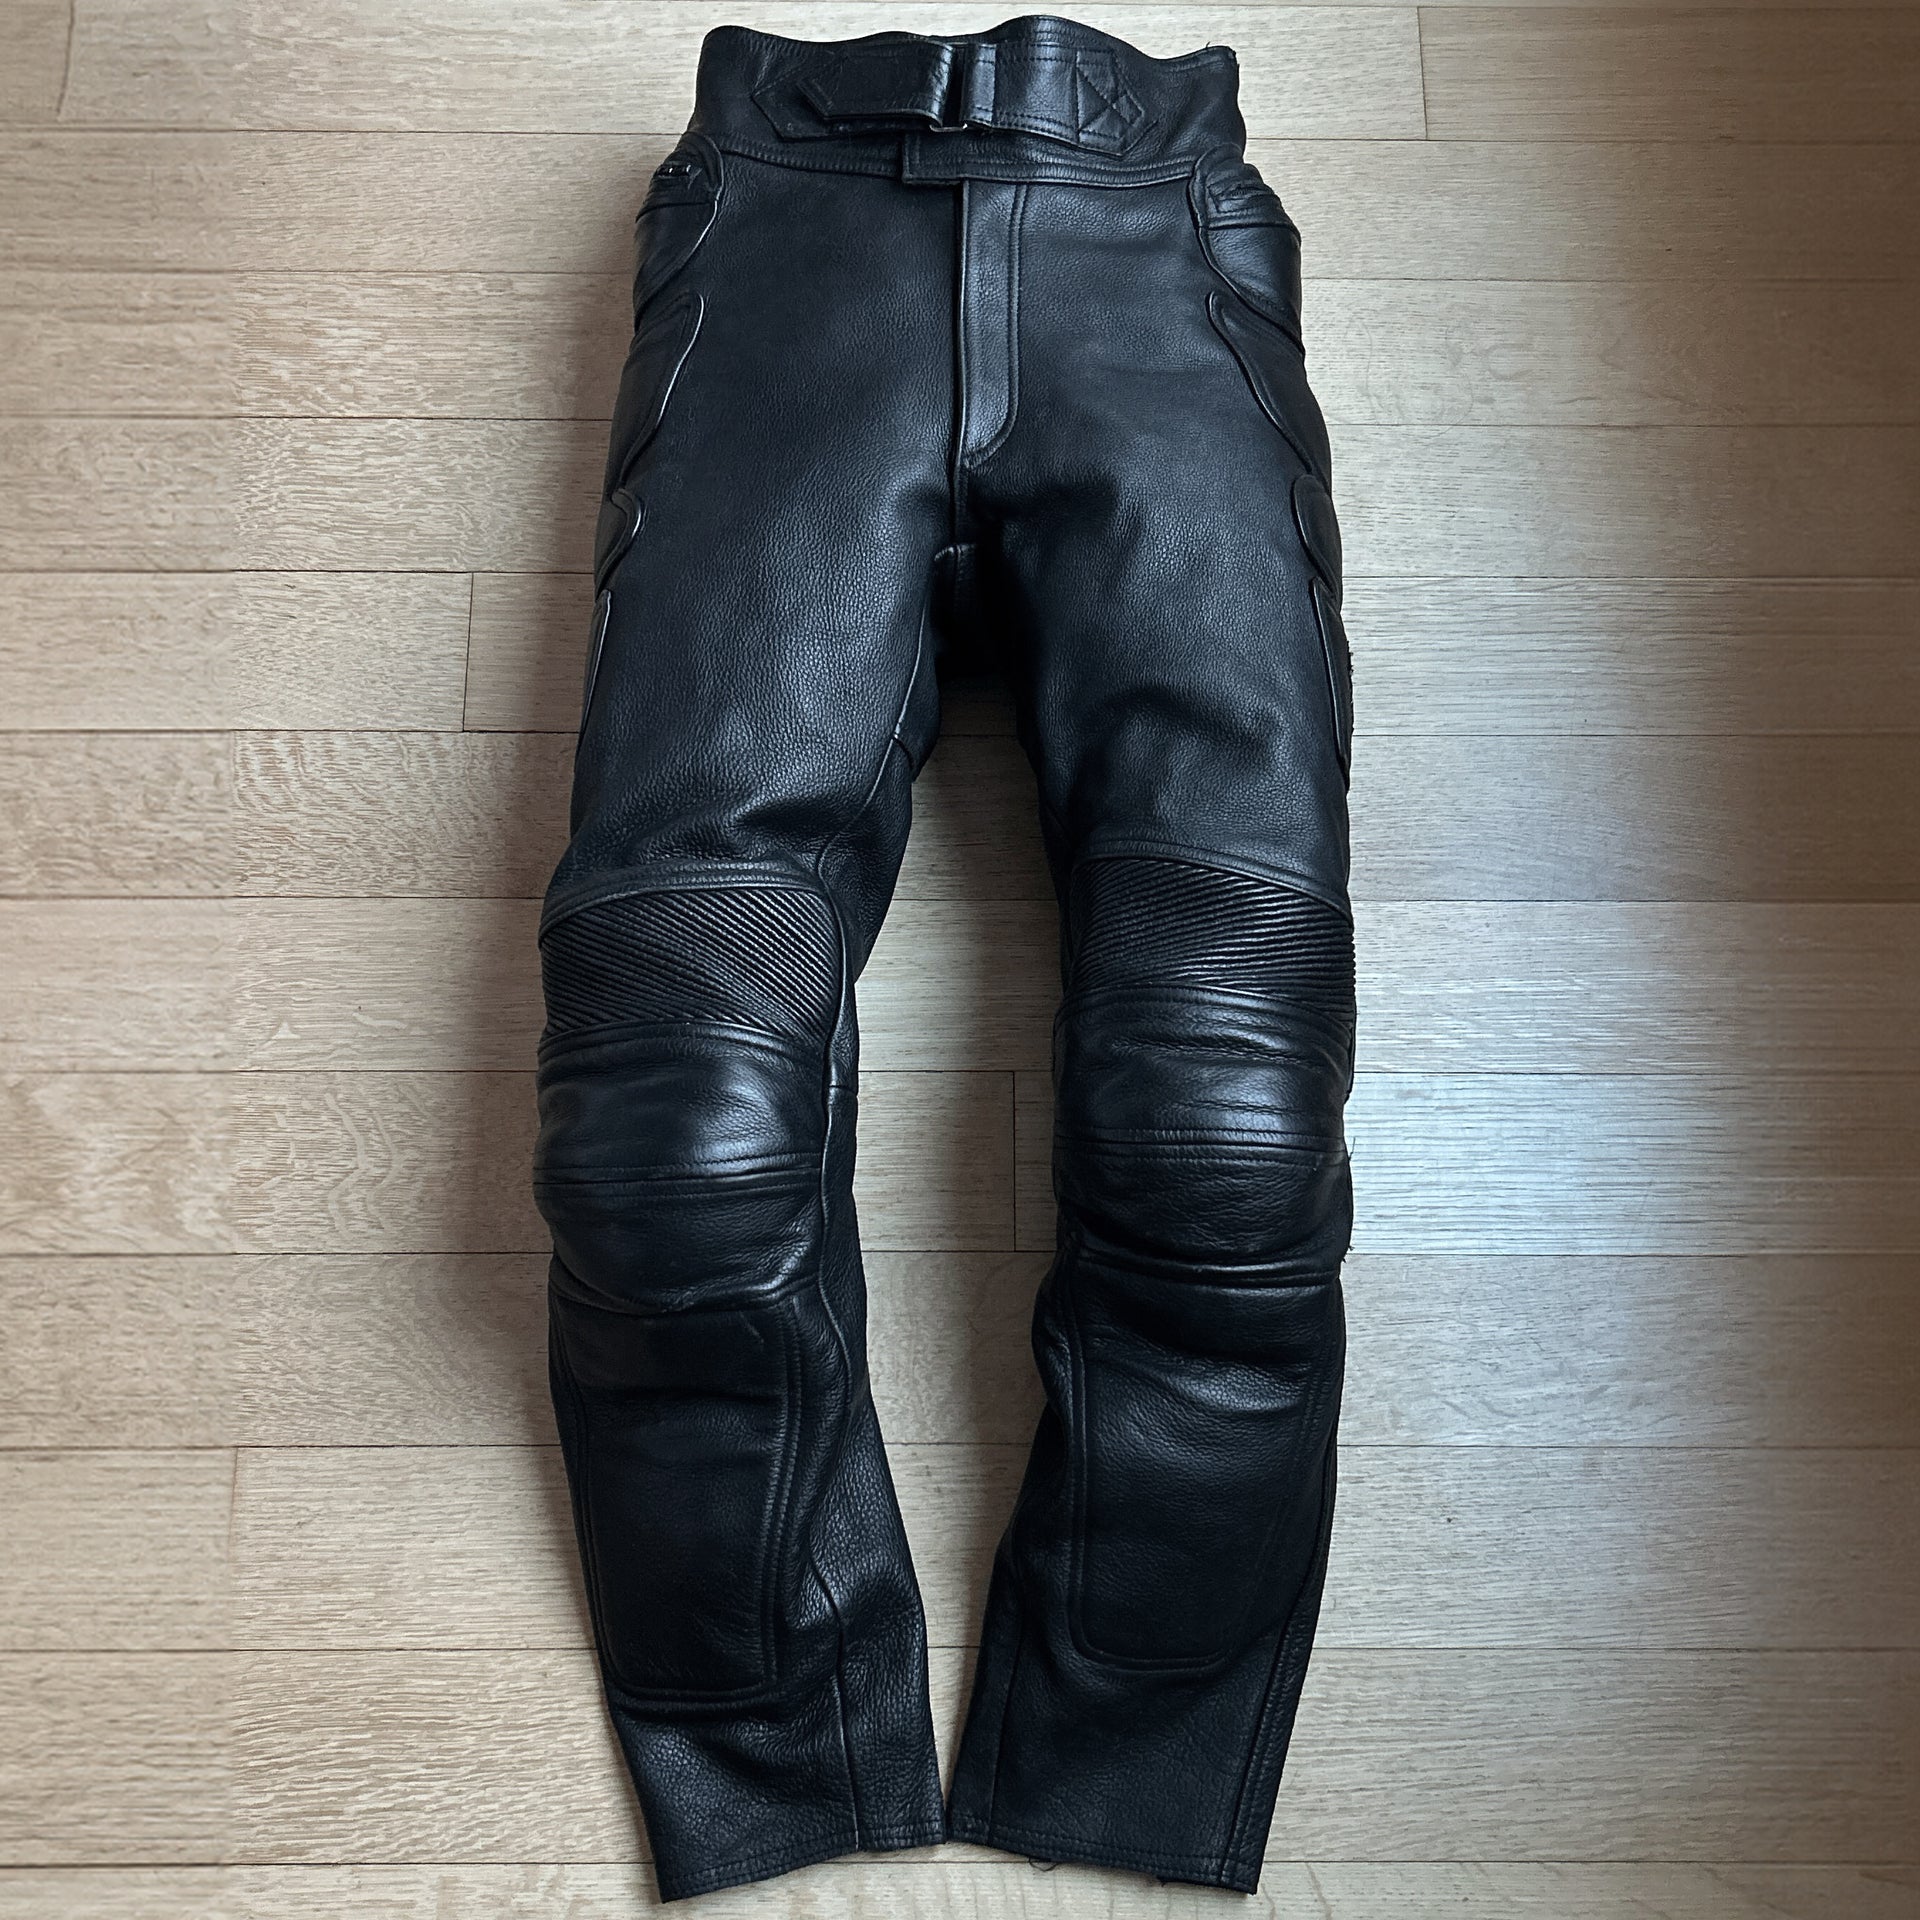 Kadoya Armour Padded Cowhide Leather Motorcycle Pants Accommodate